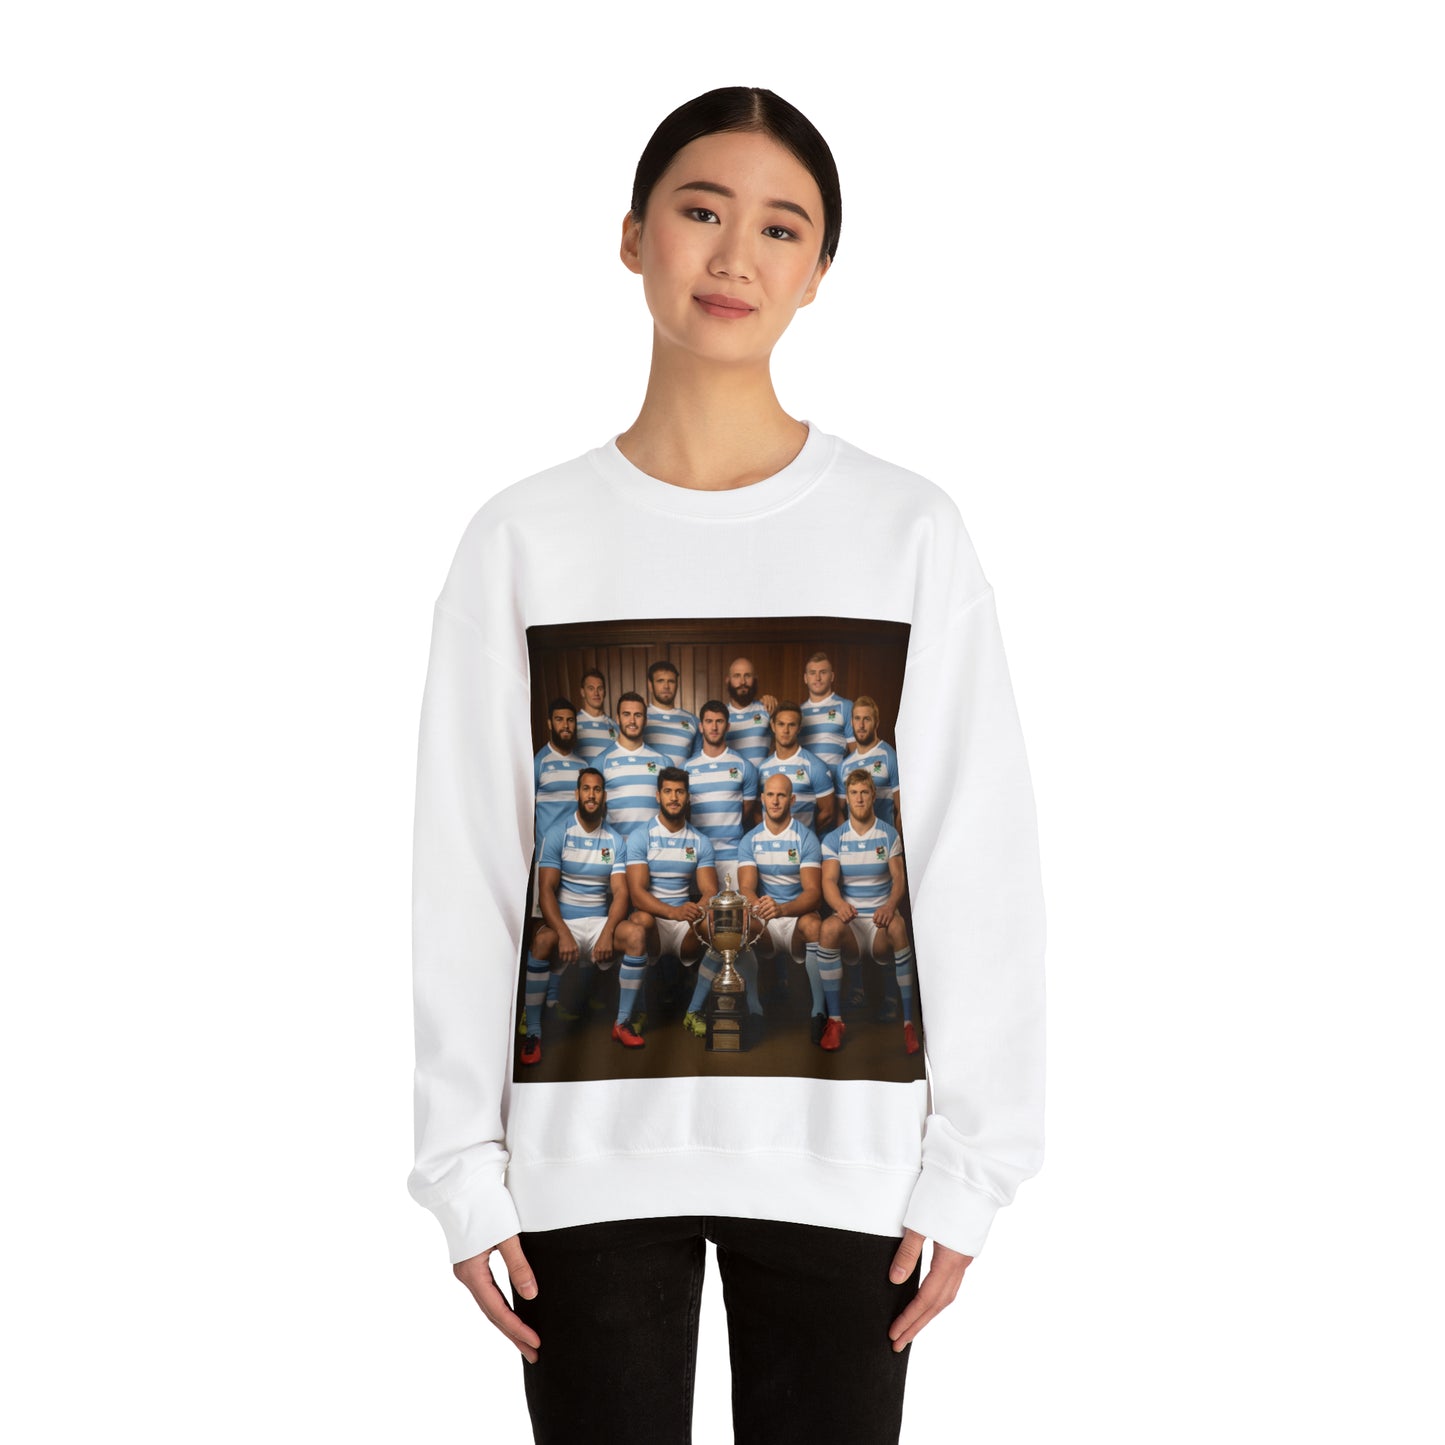 Pumas RWC photoshoot - light sweatshirts